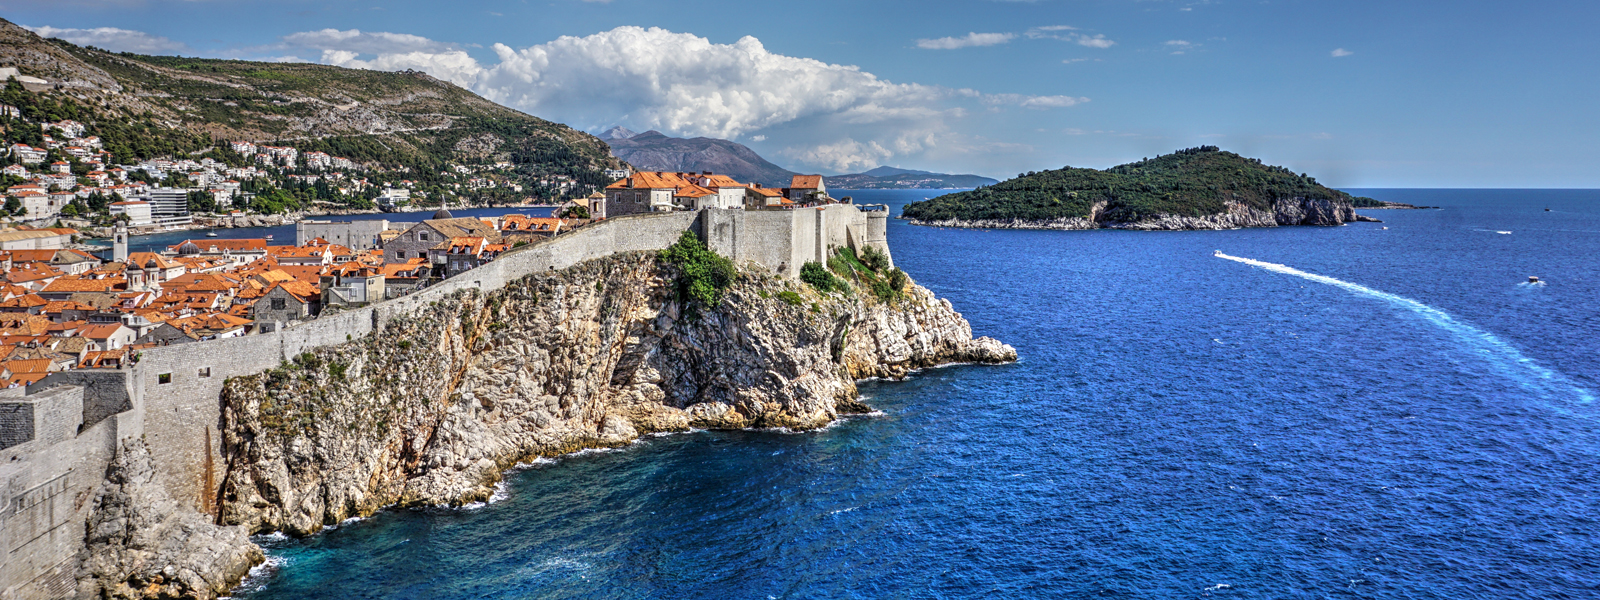 Croatia is Spectacular!